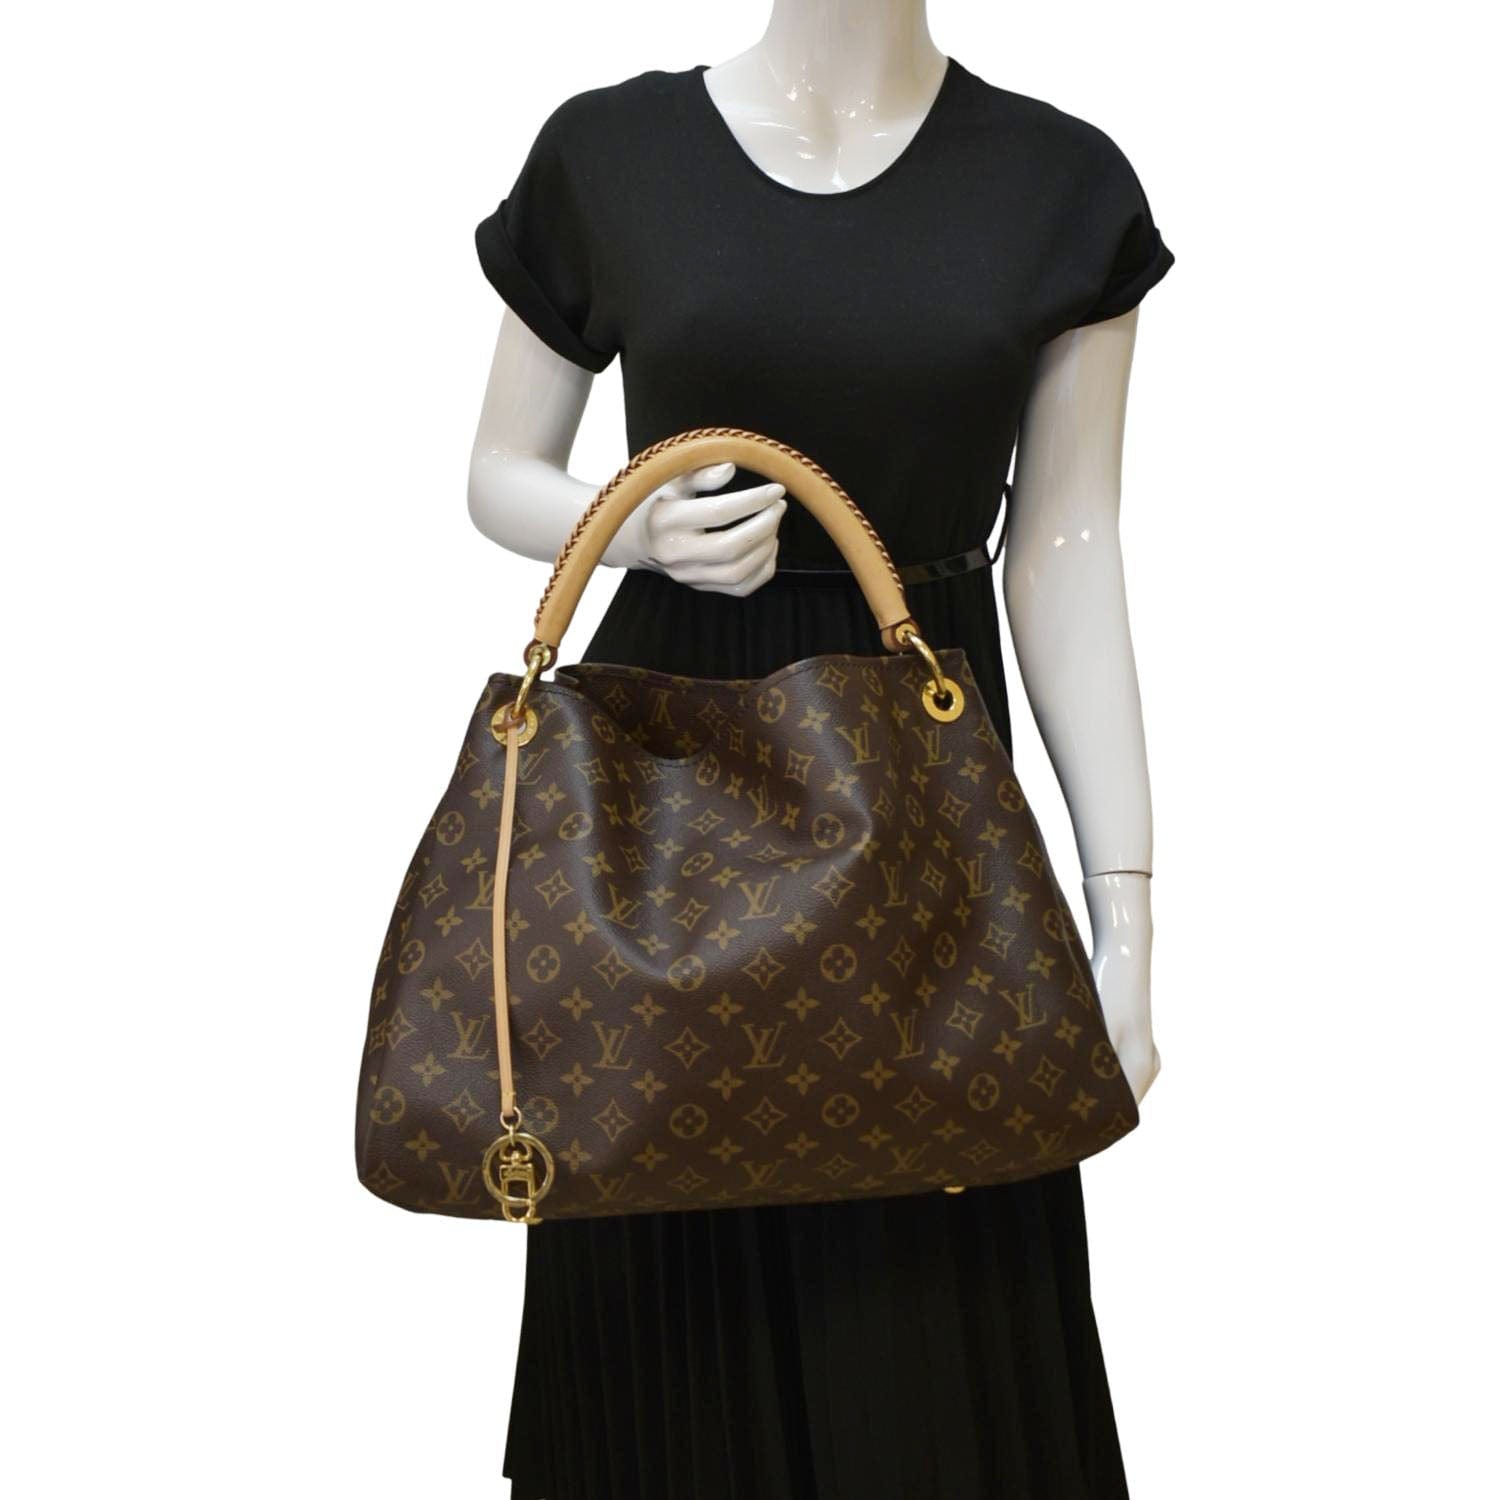 Louis Vuitton Monogram Artsy MM - Hobos, Handbags